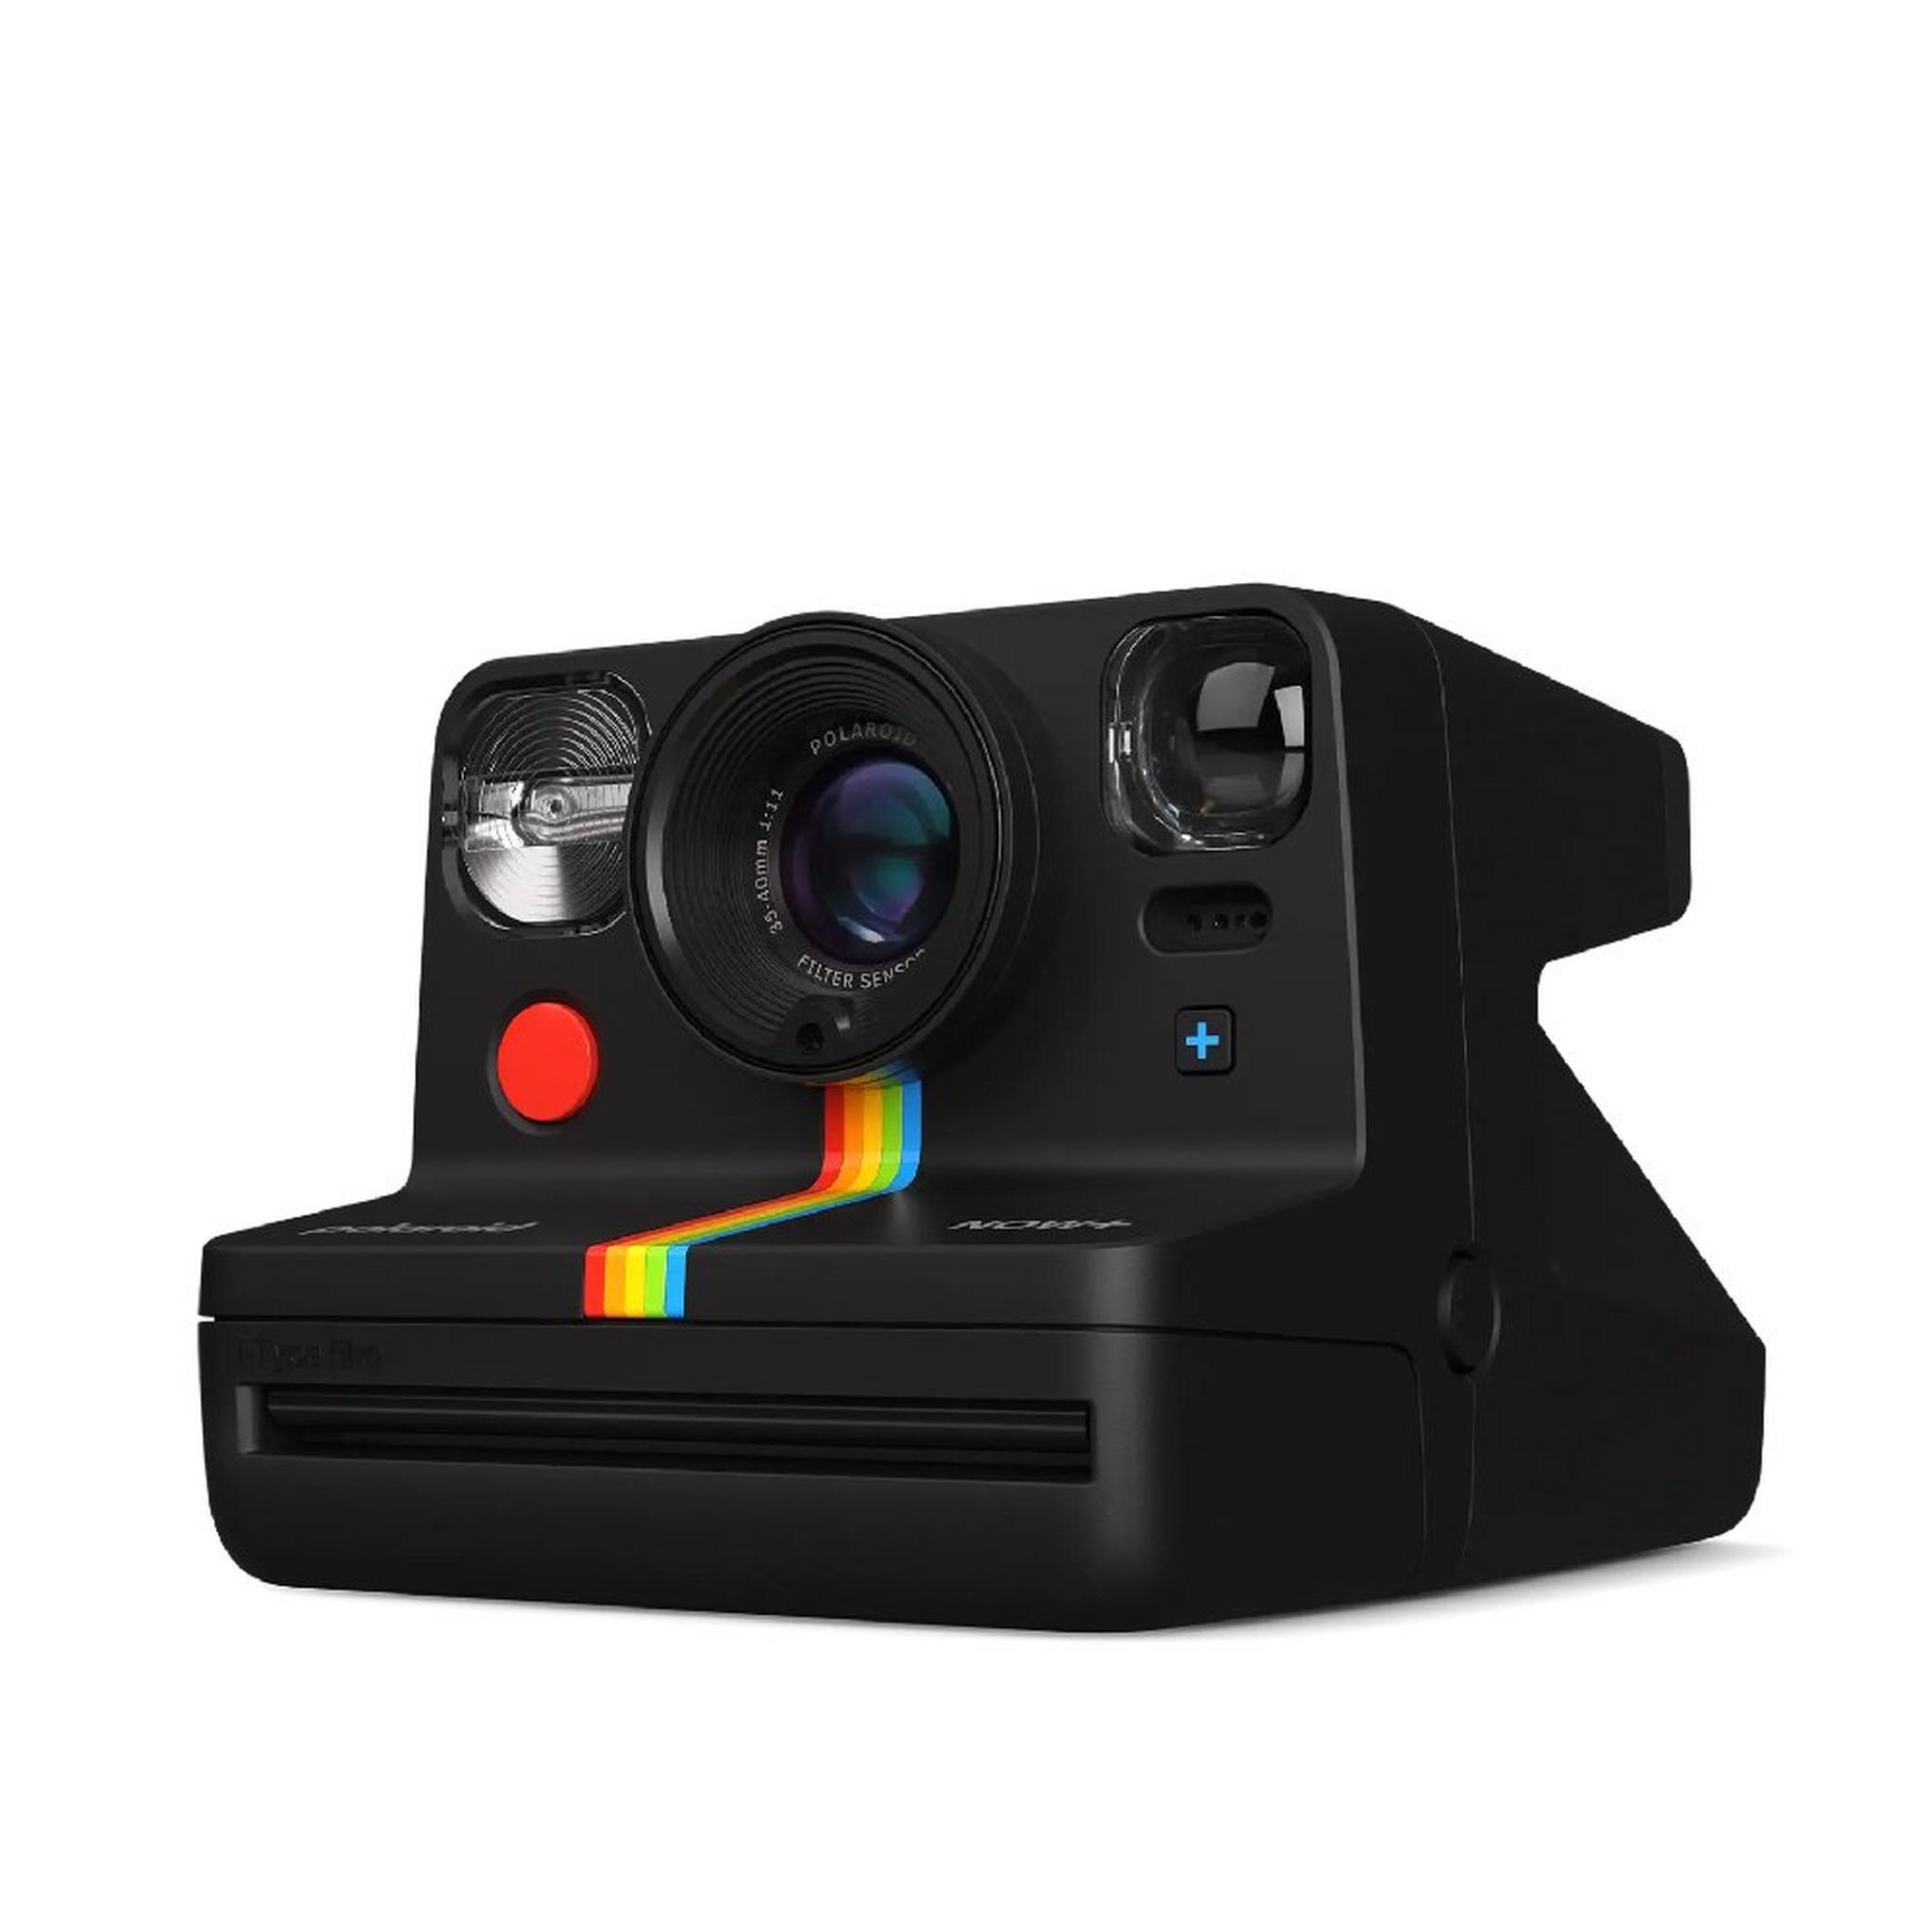 Polaroid Now + Generation 2 i-Type Instant Camera, 009076 - Black